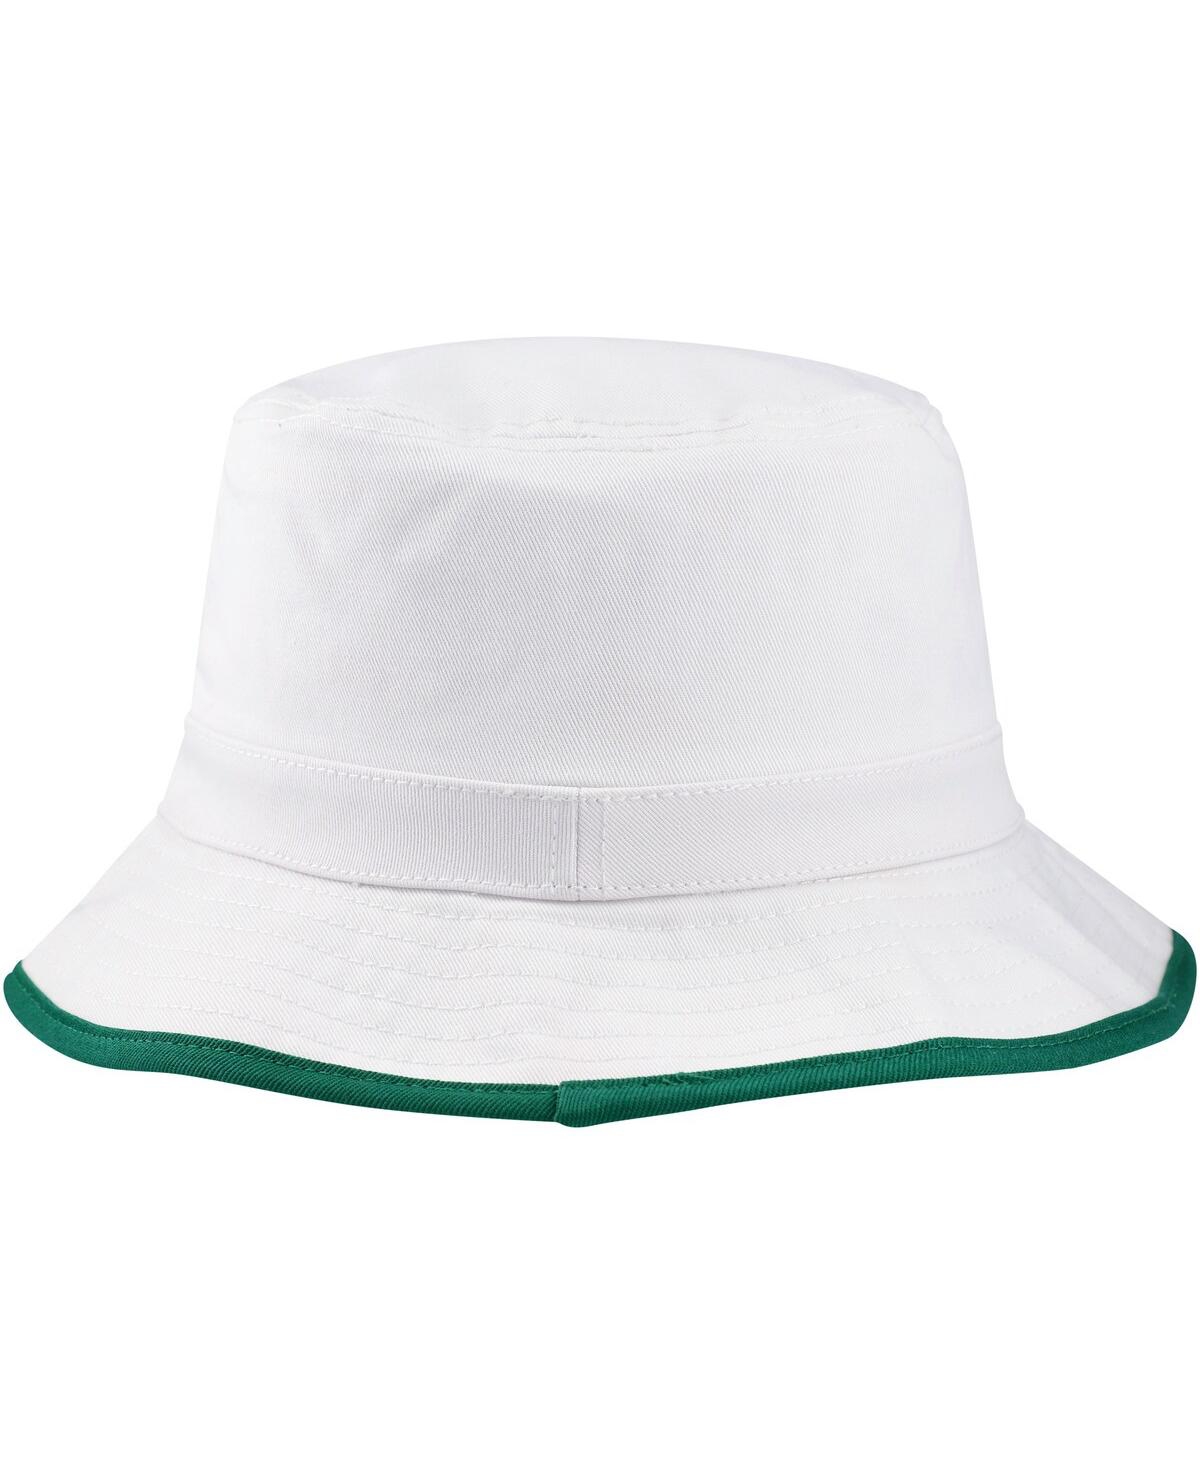 Shop Barstool Golf Men's  White Wm Phoenix Open Reversible Bucket Hat